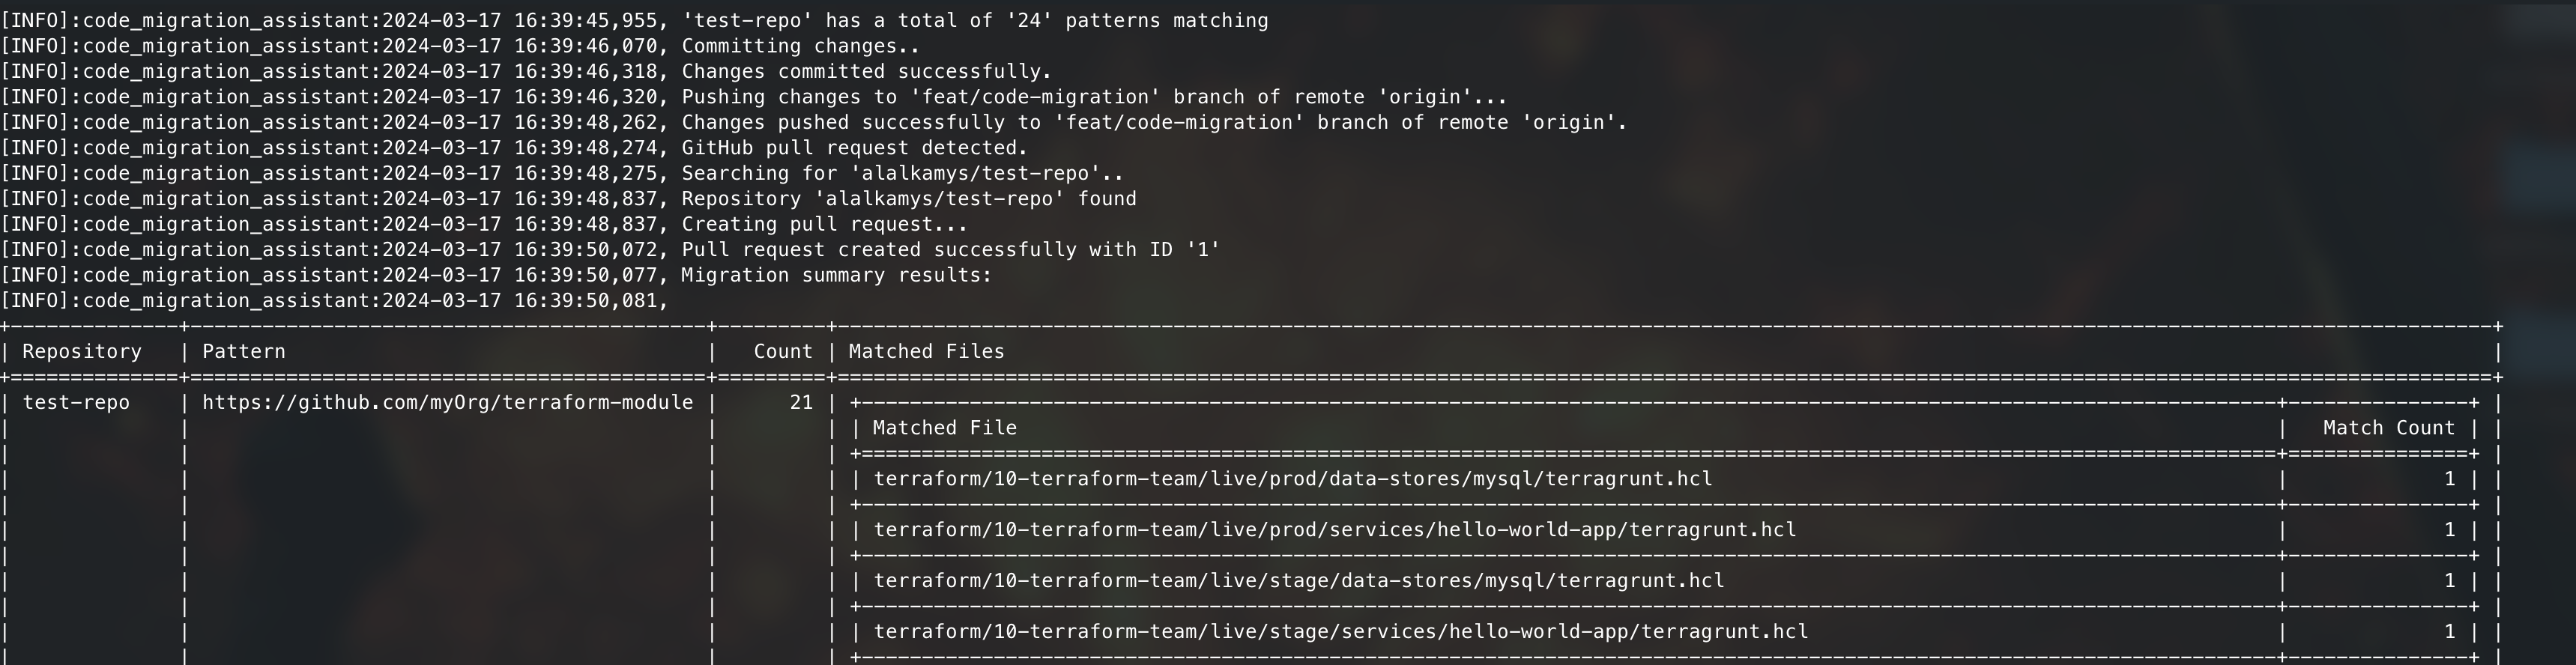 code-migration-assistant-logs-01.png